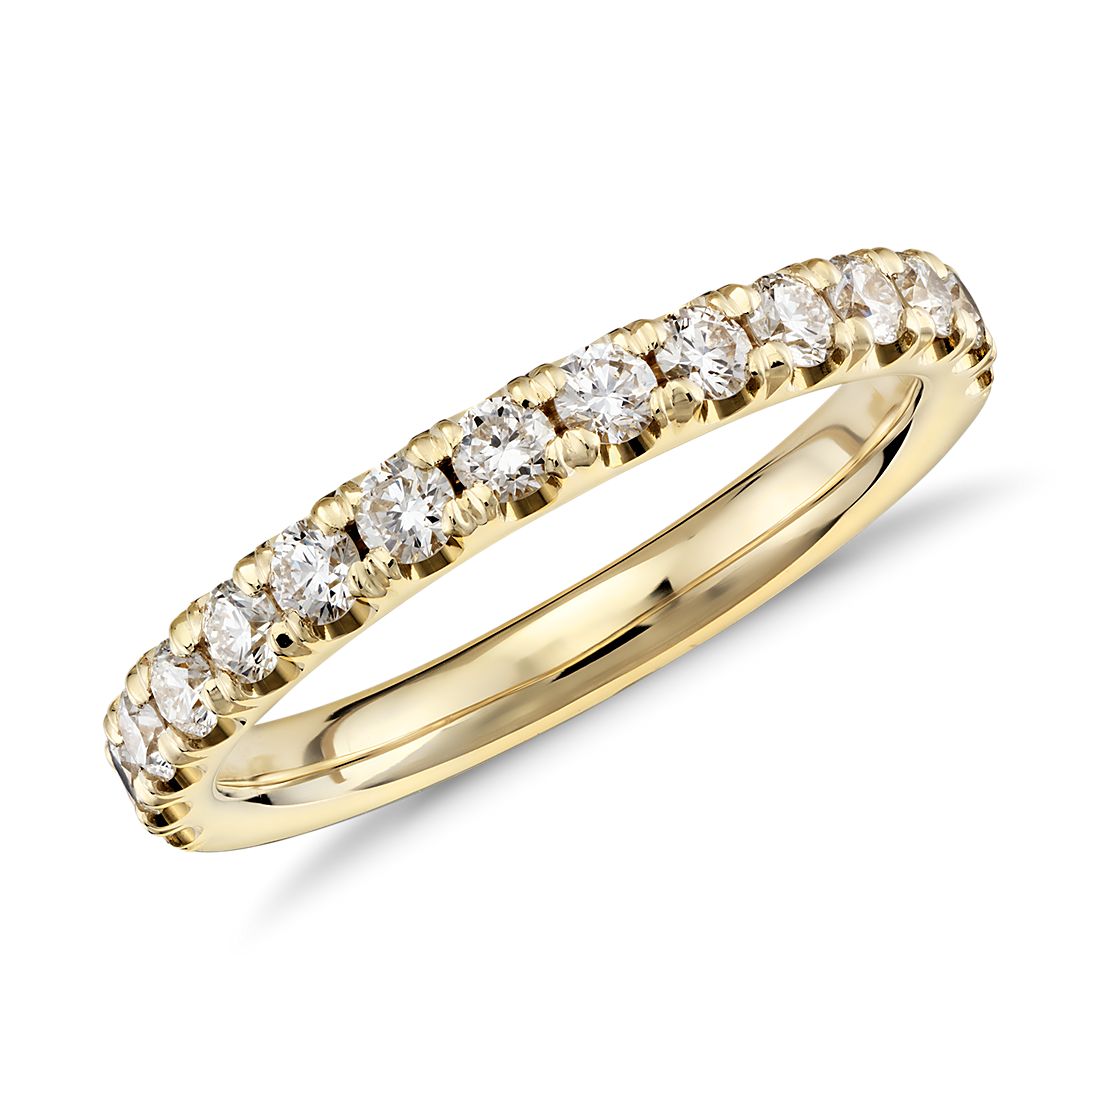 Scalloped Pavé Diamond Ring in 18k Yellow Gold